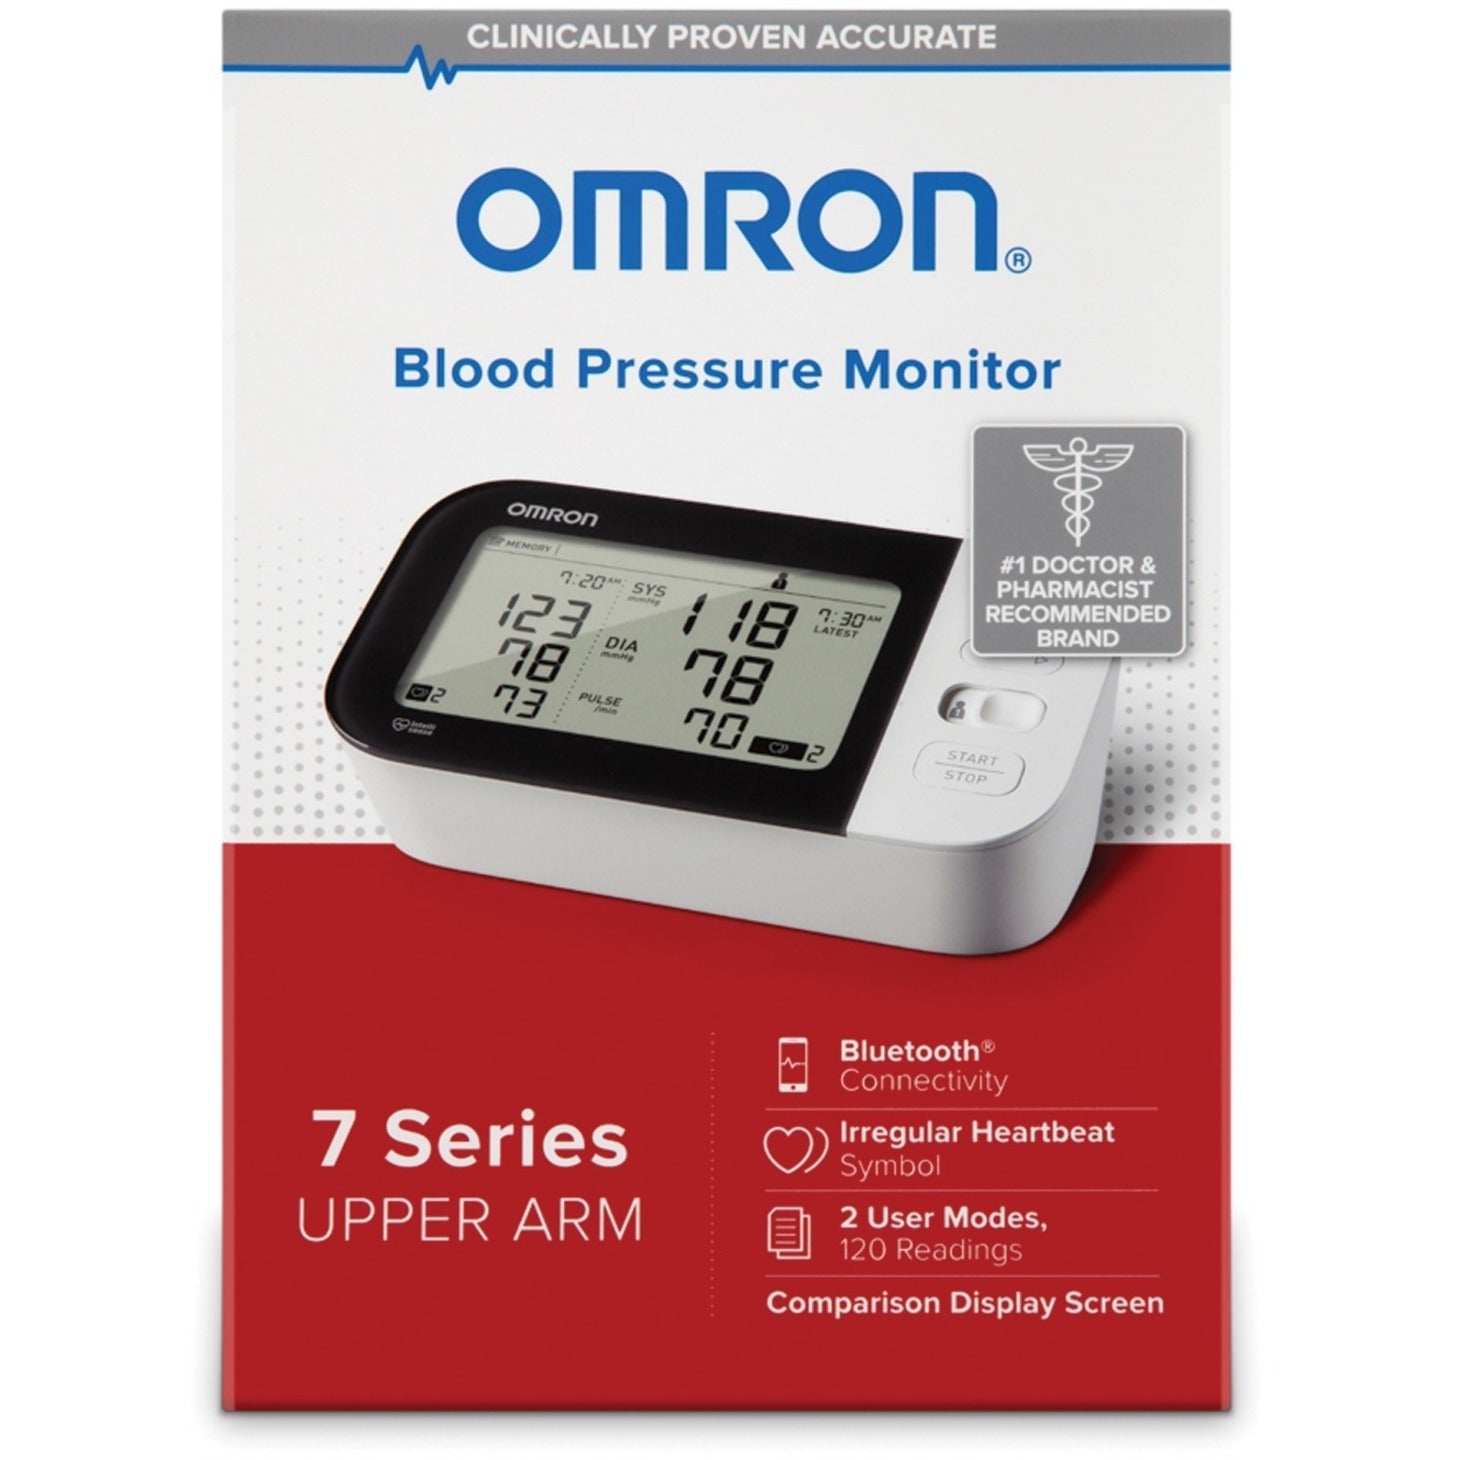 Omron BP7350 7 Series Wireless Upper Arm Blood Pressure Monitor, Irregular Heartbeat Detection, Memory Storage, LCD Display